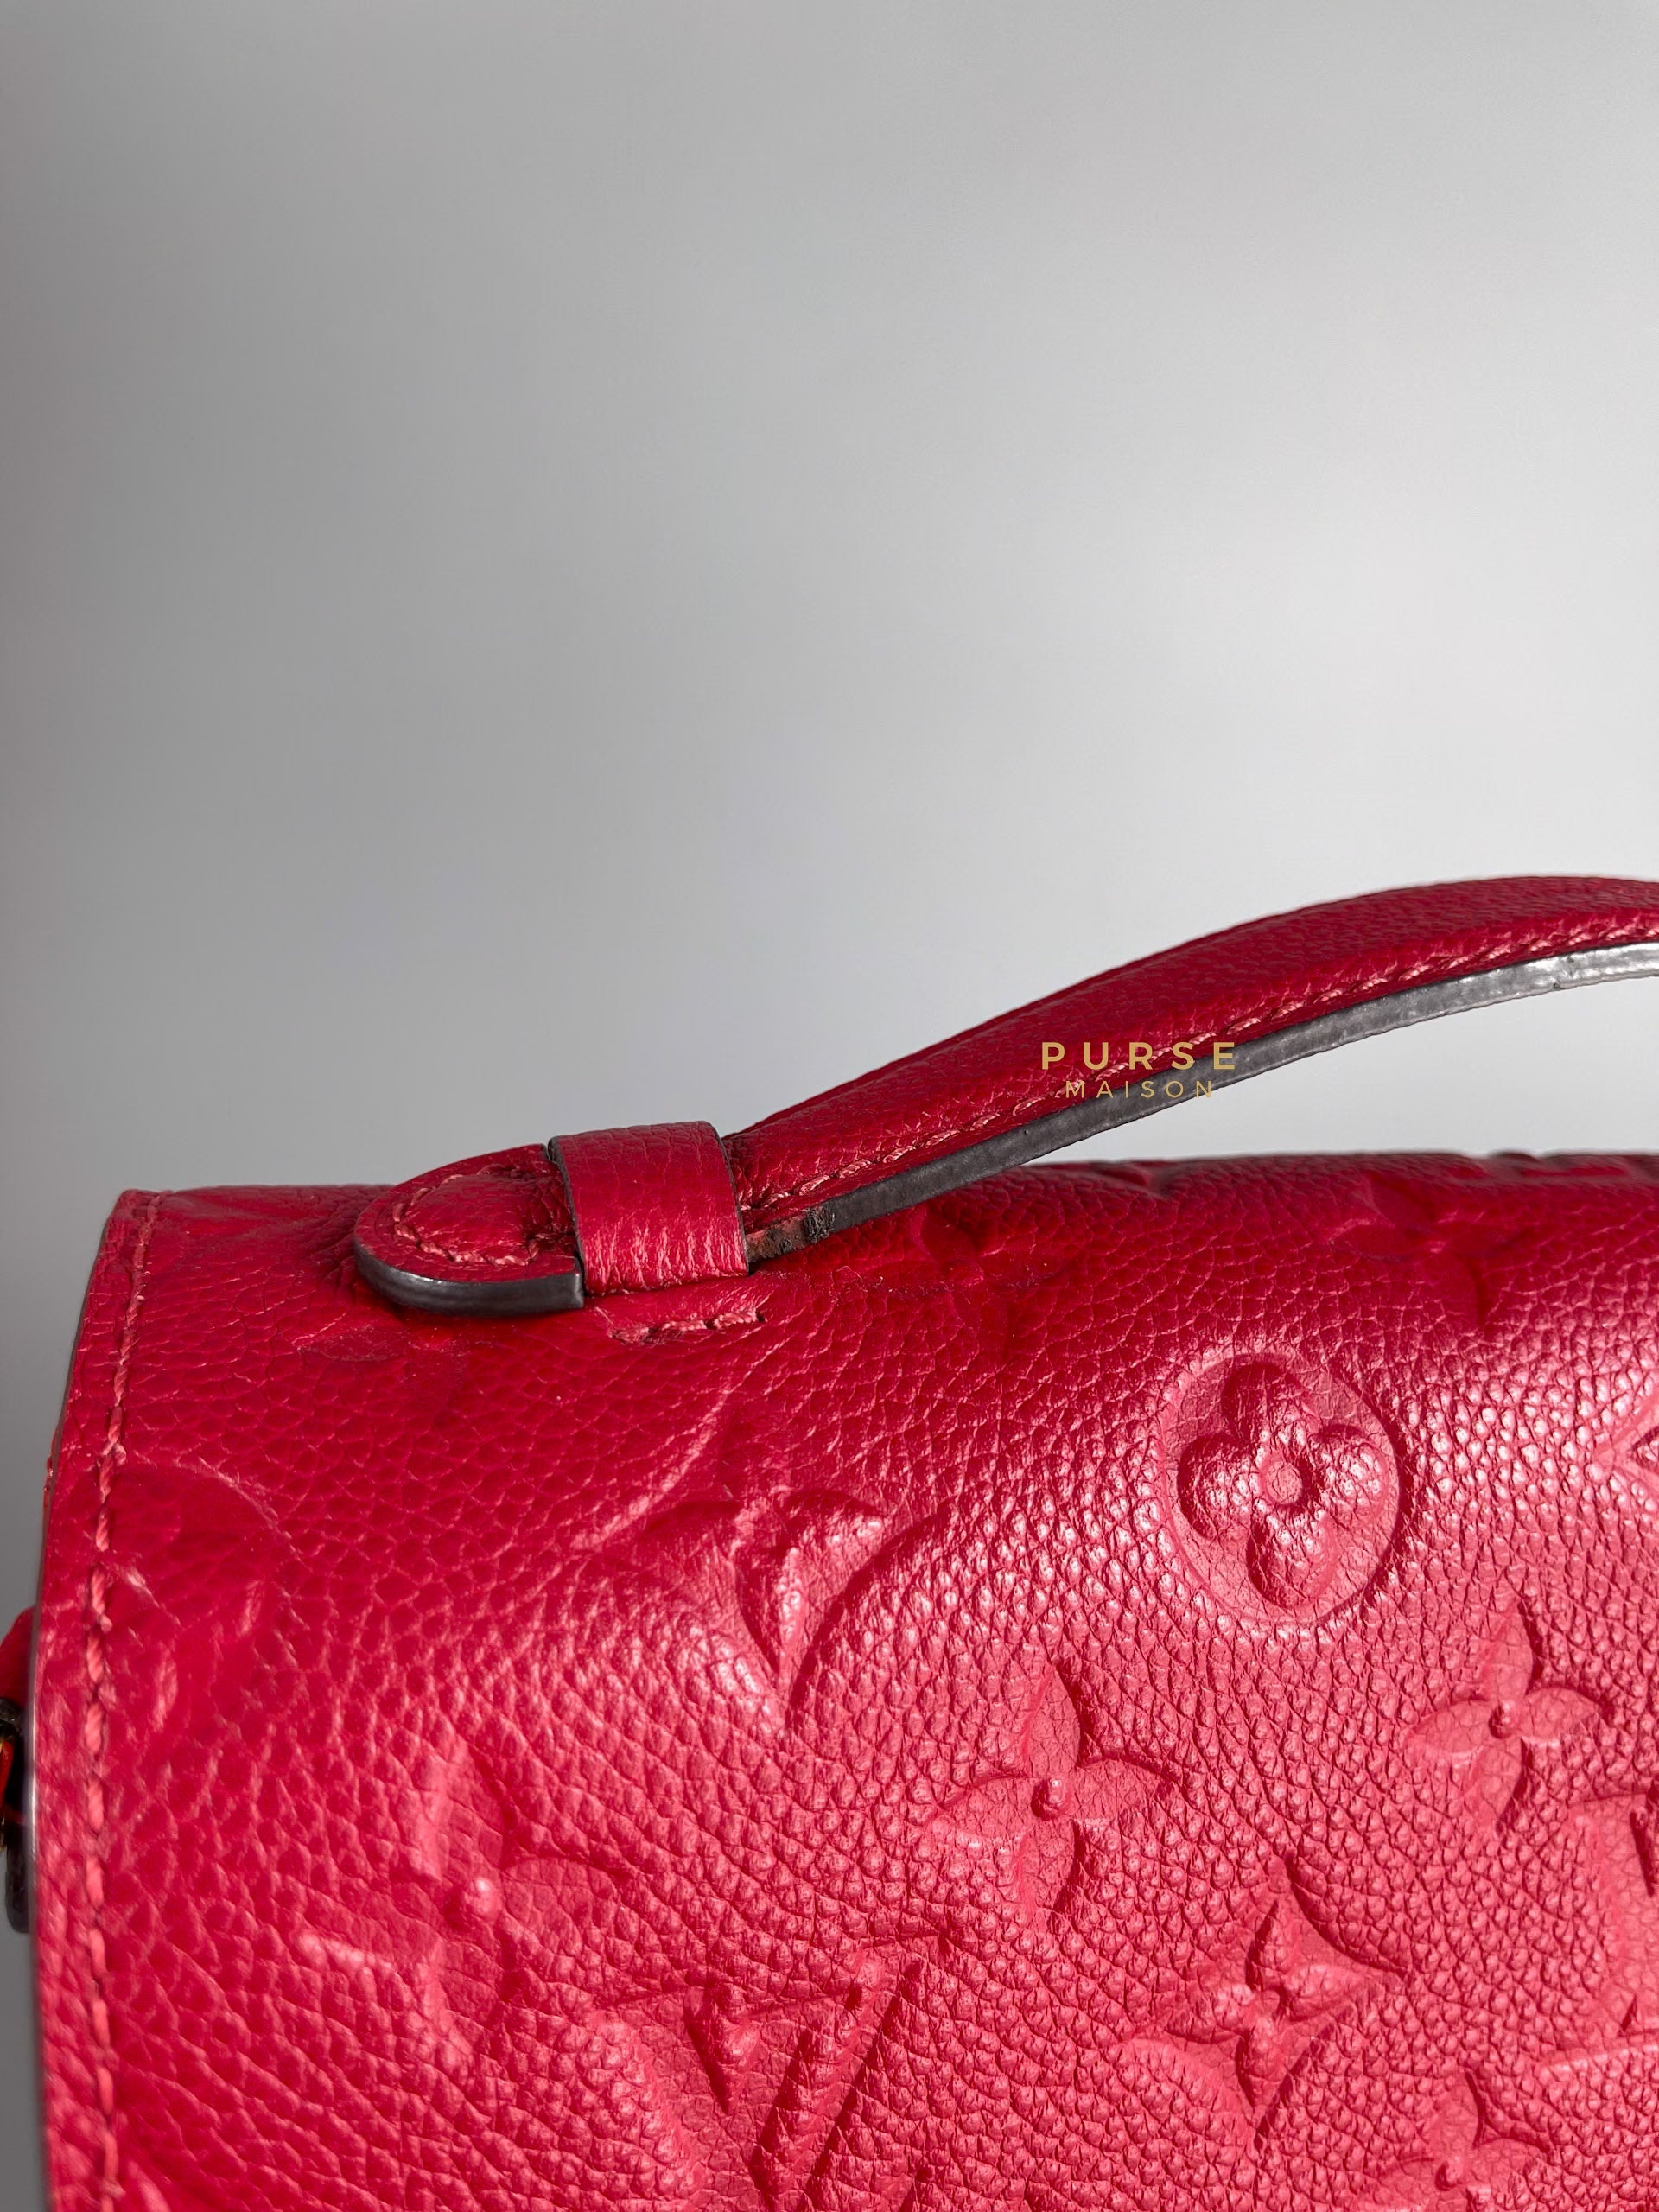 Louis Vuitton Empreinte Pochette Metis in Red (Date code: AR5108) | Purse Maison Luxury Bags Shop